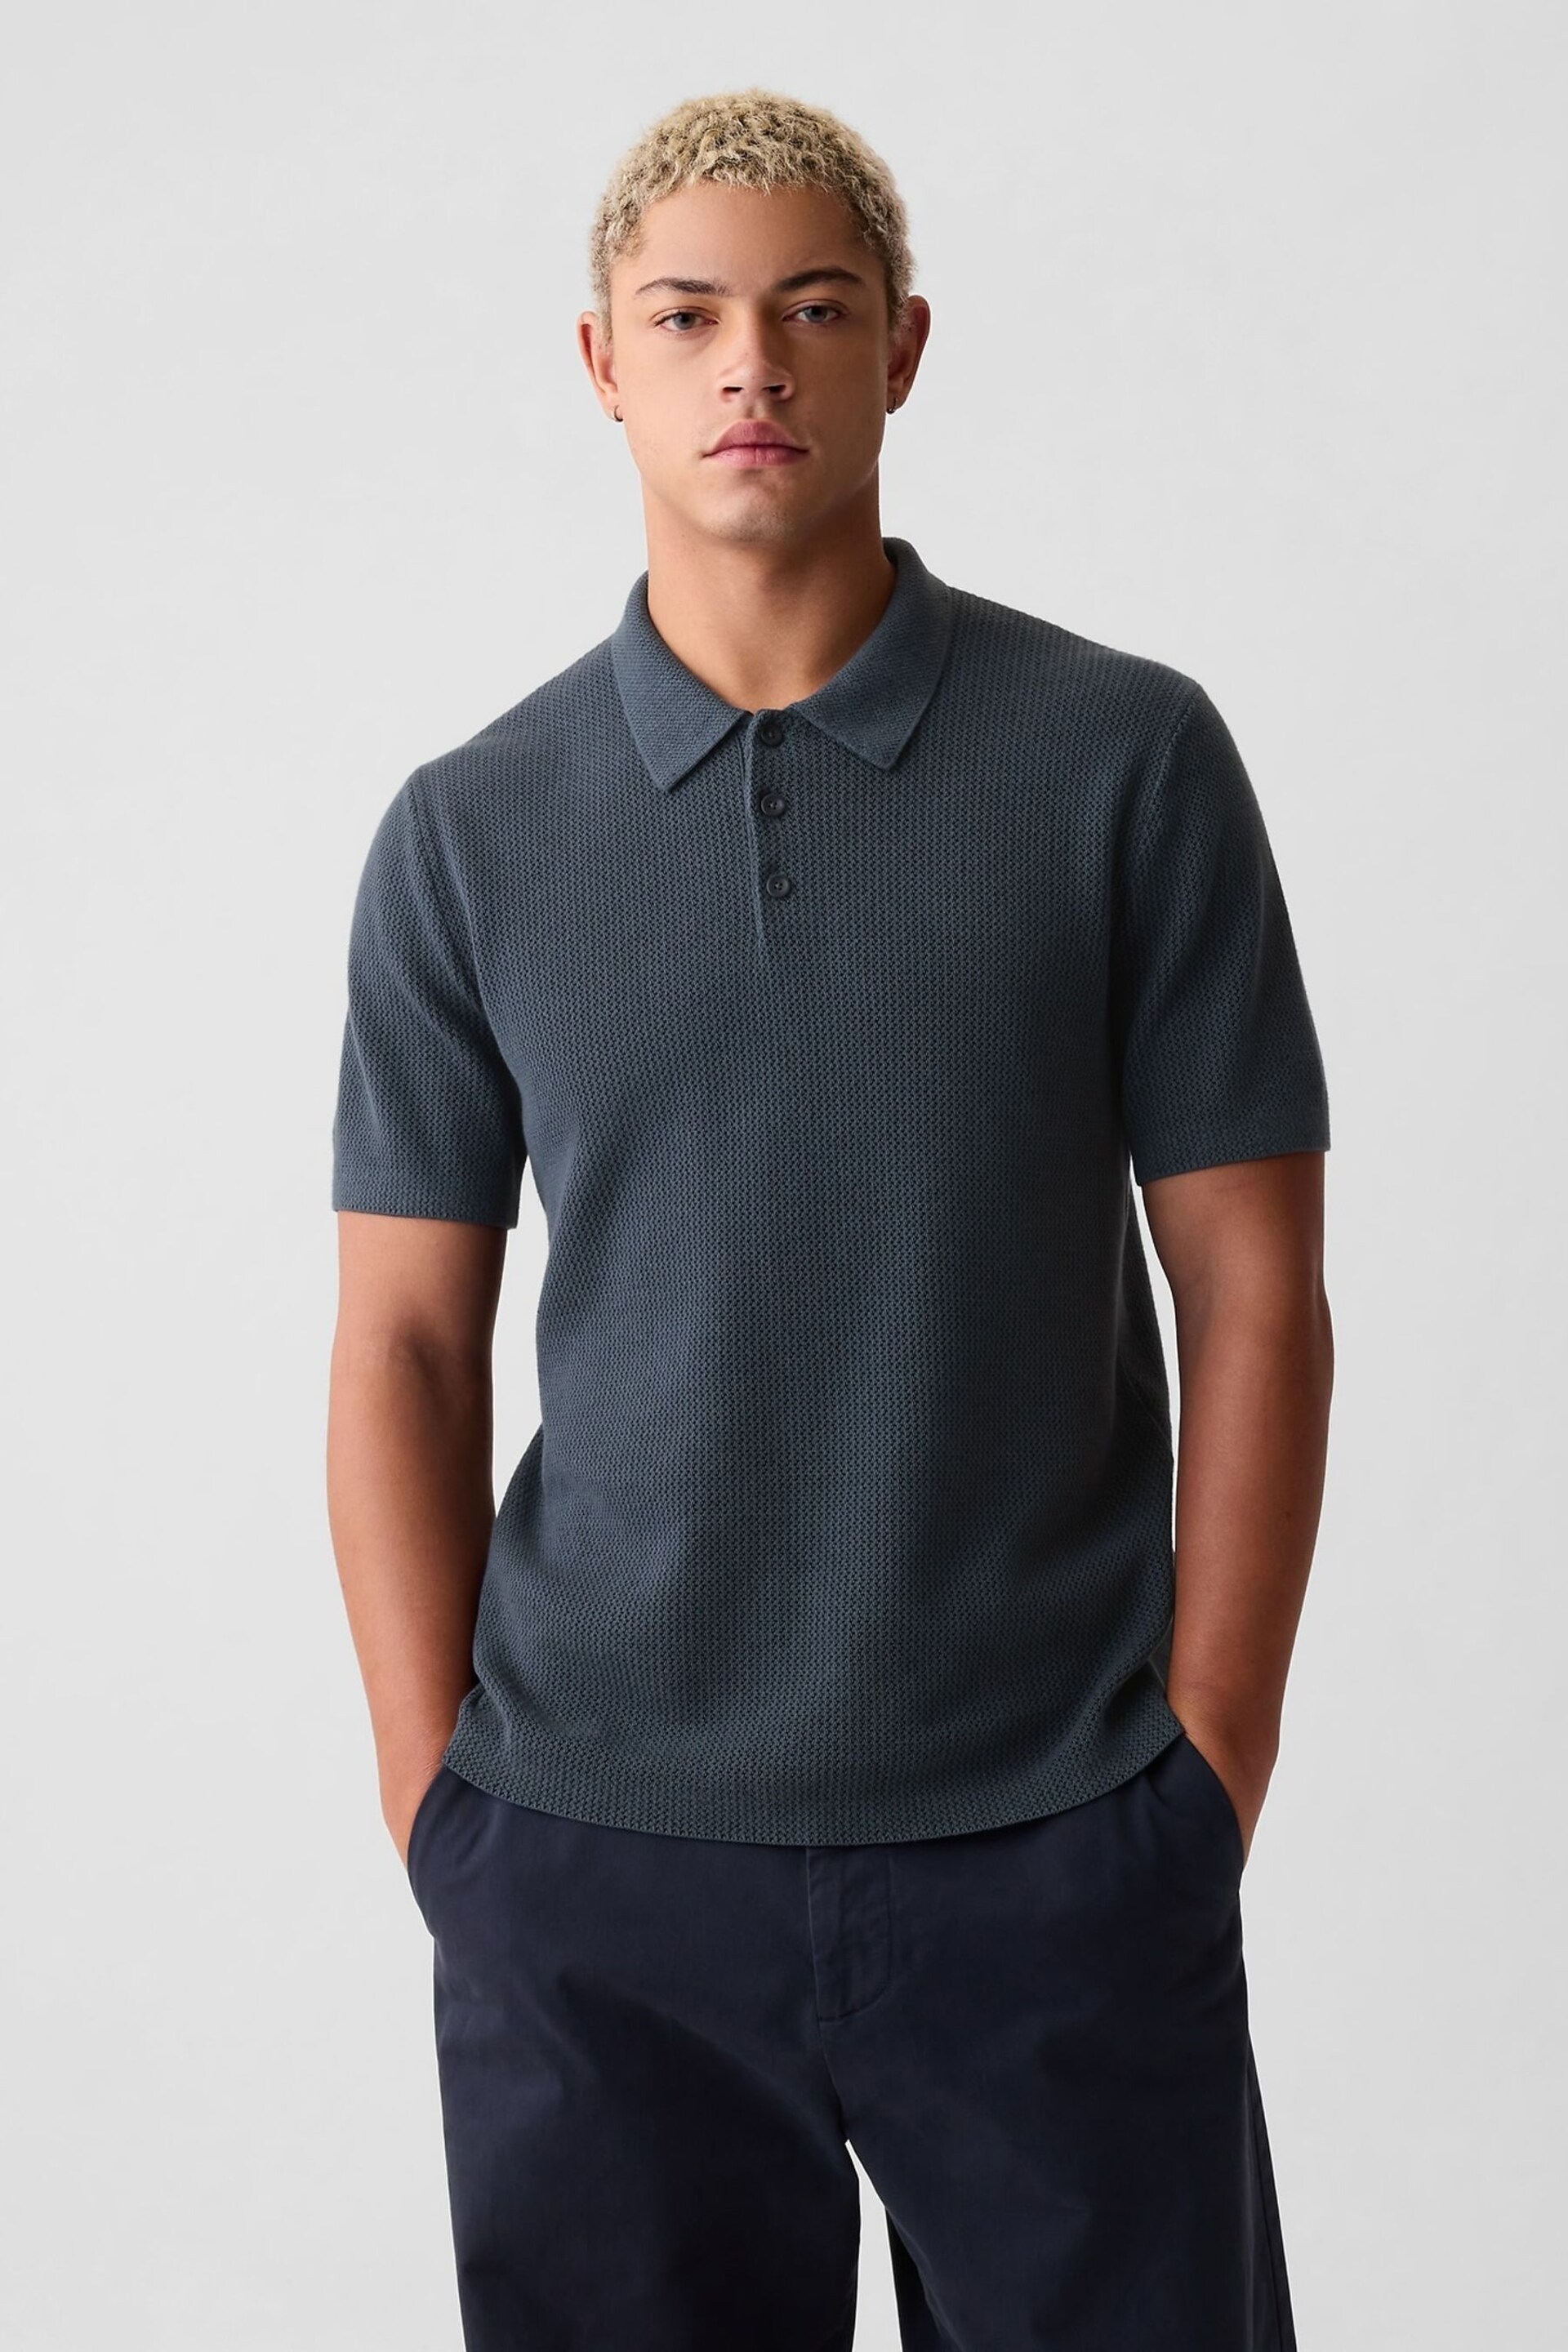 Gap Blue Cotton Textured Short Sleeve Polo Shirt - Image 1 of 4